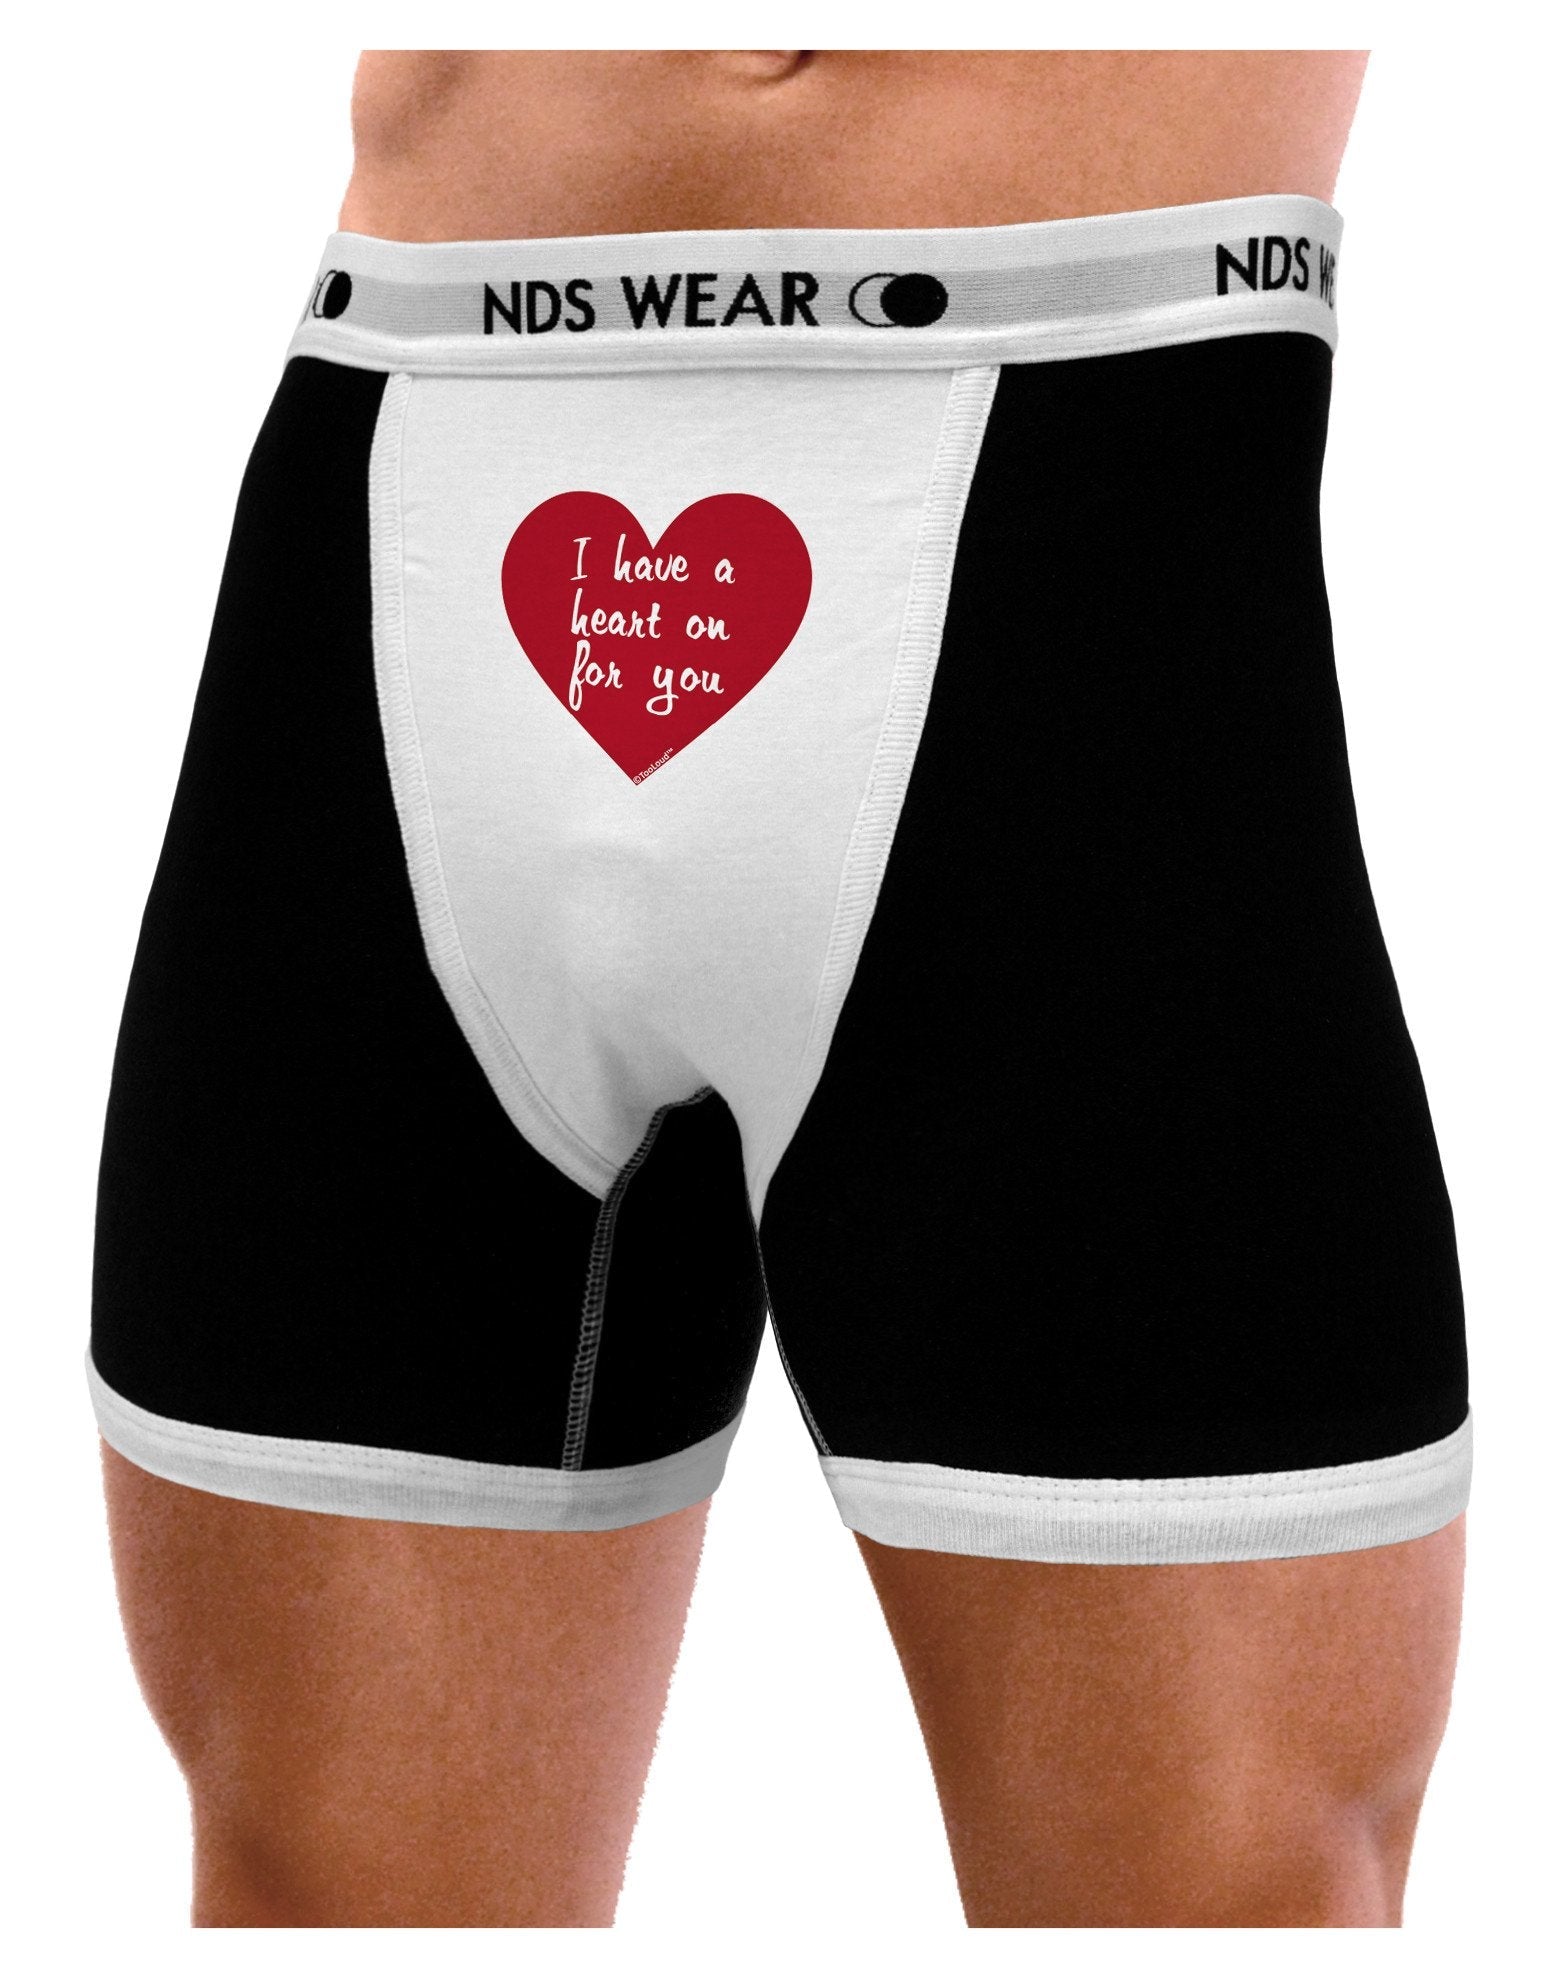 NDS Wear Mens Sexy Tuxedo Boxer Brief Underwear - Black and White